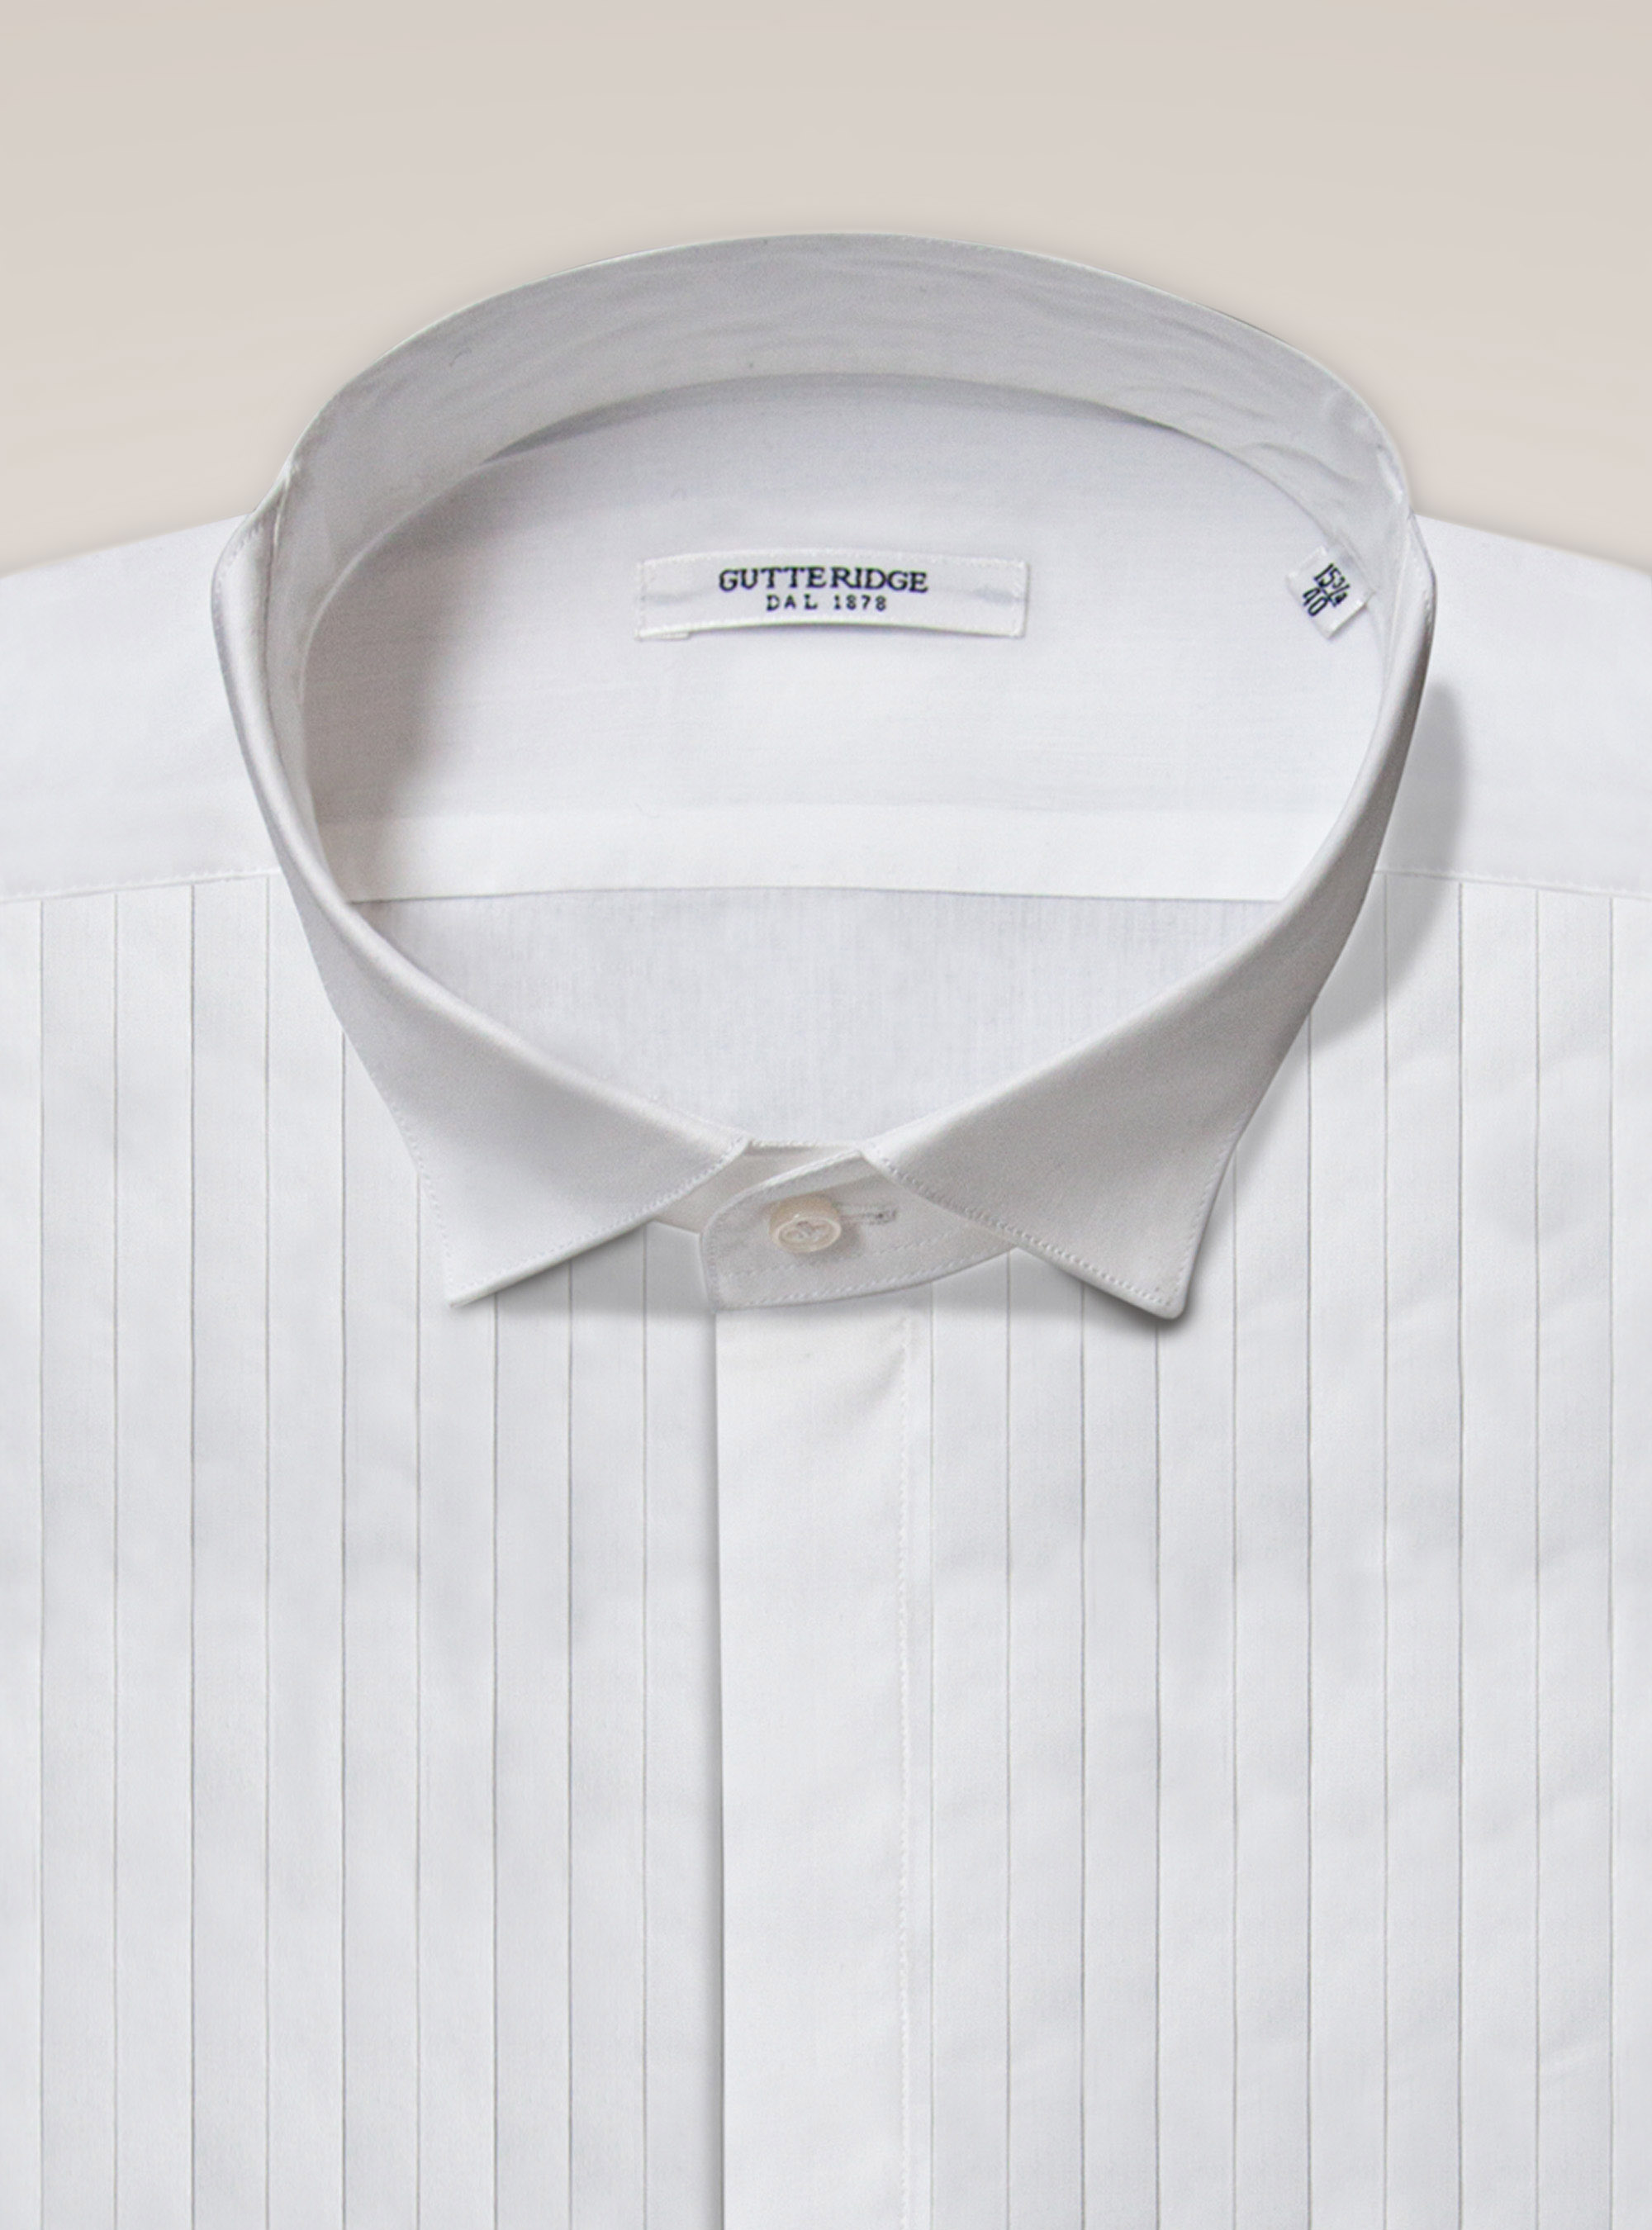 Camicia smoking collo diplomatico con polso gemelli | Gutteridge |  catalog-gutteridge-storefront Uomo